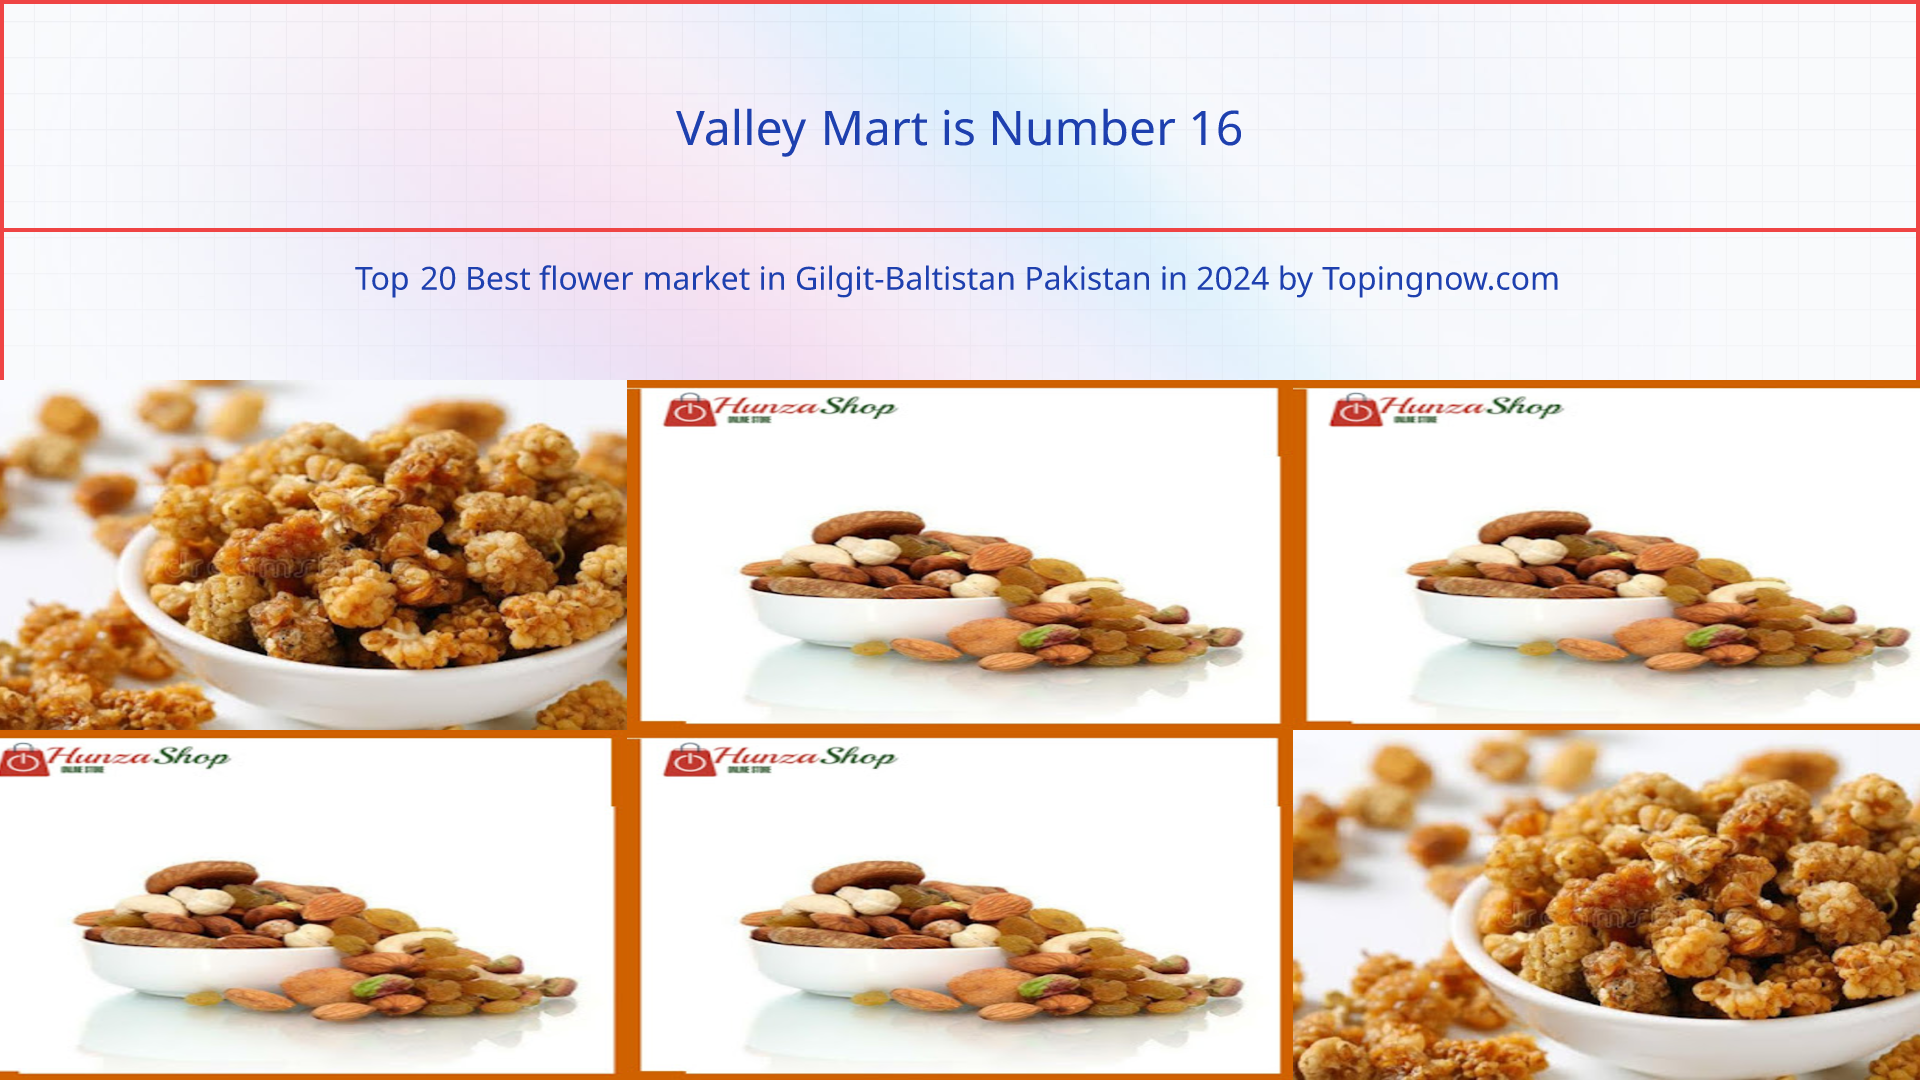 Valley Mart: Top 20 Best flower market in Gilgit-Baltistan Pakistan in 2024